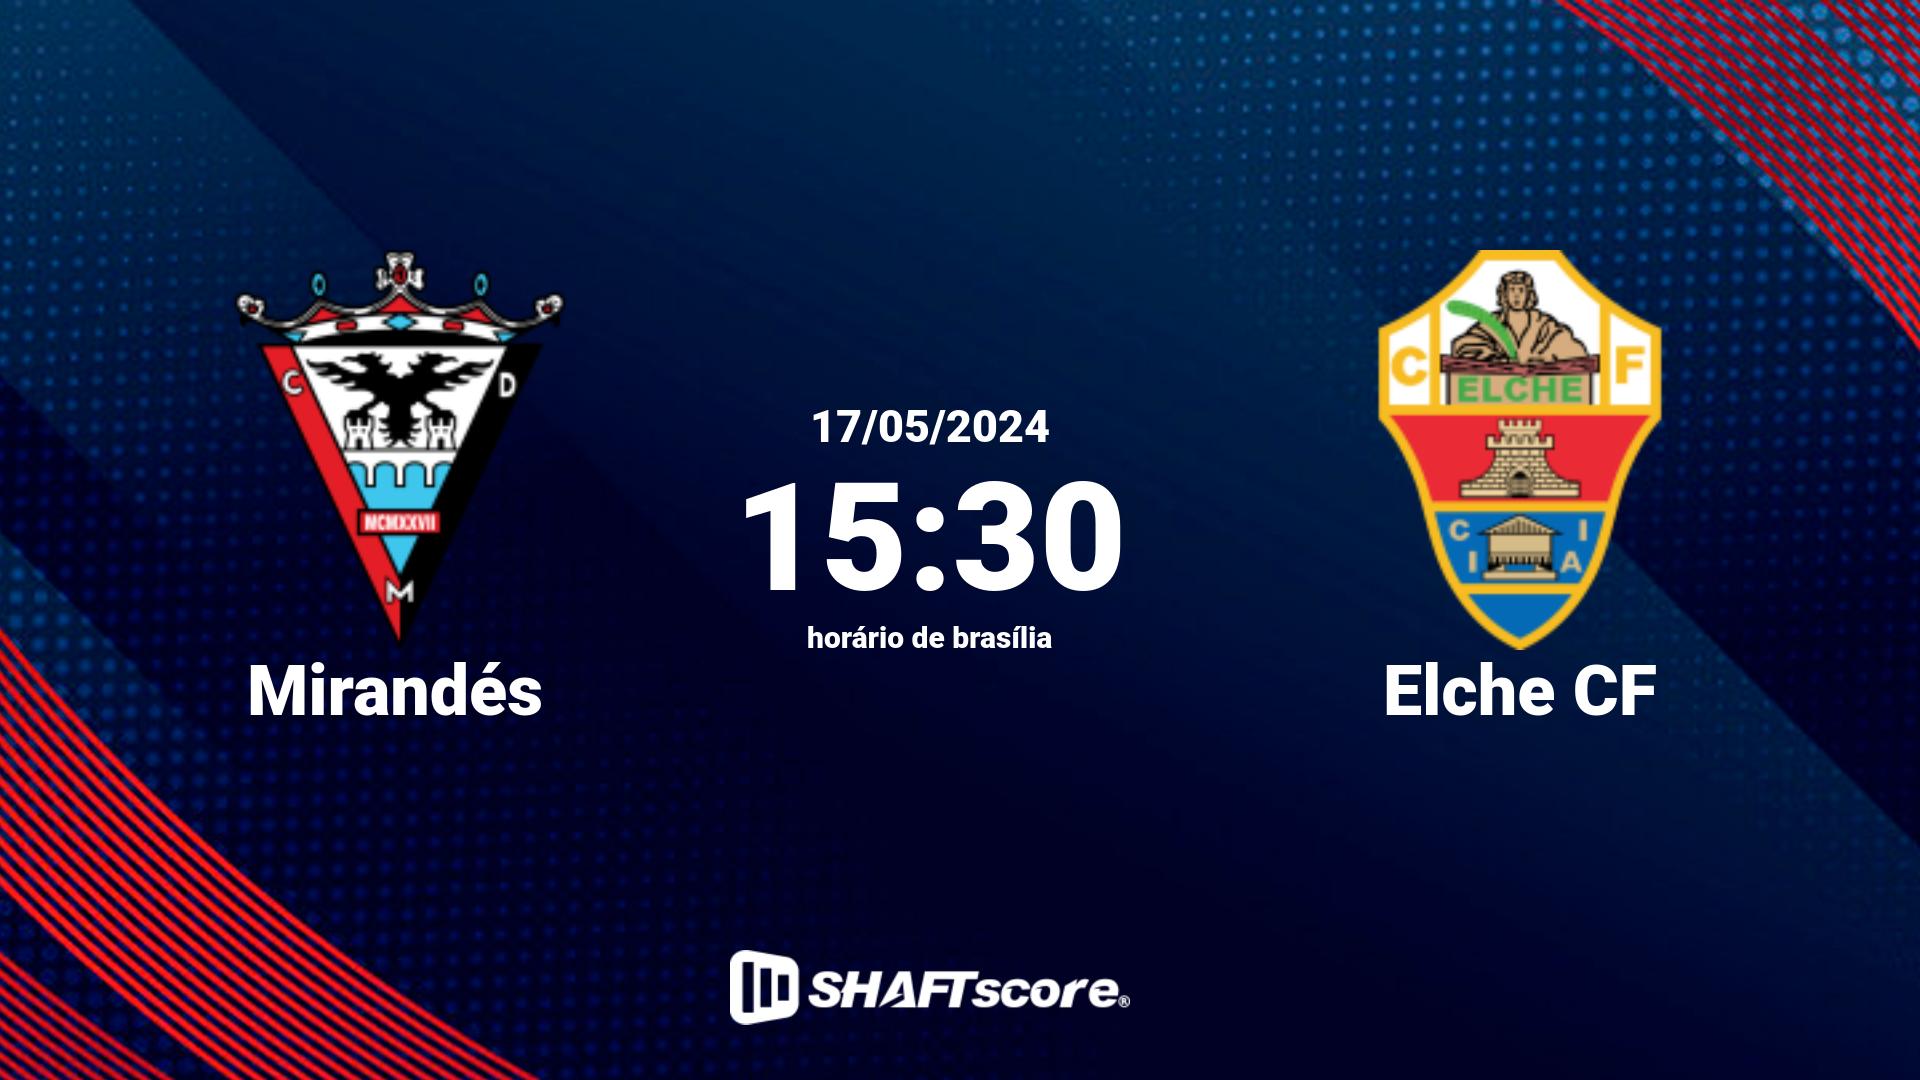 Estatísticas do jogo Mirandés vs Elche CF 17.05 15:30